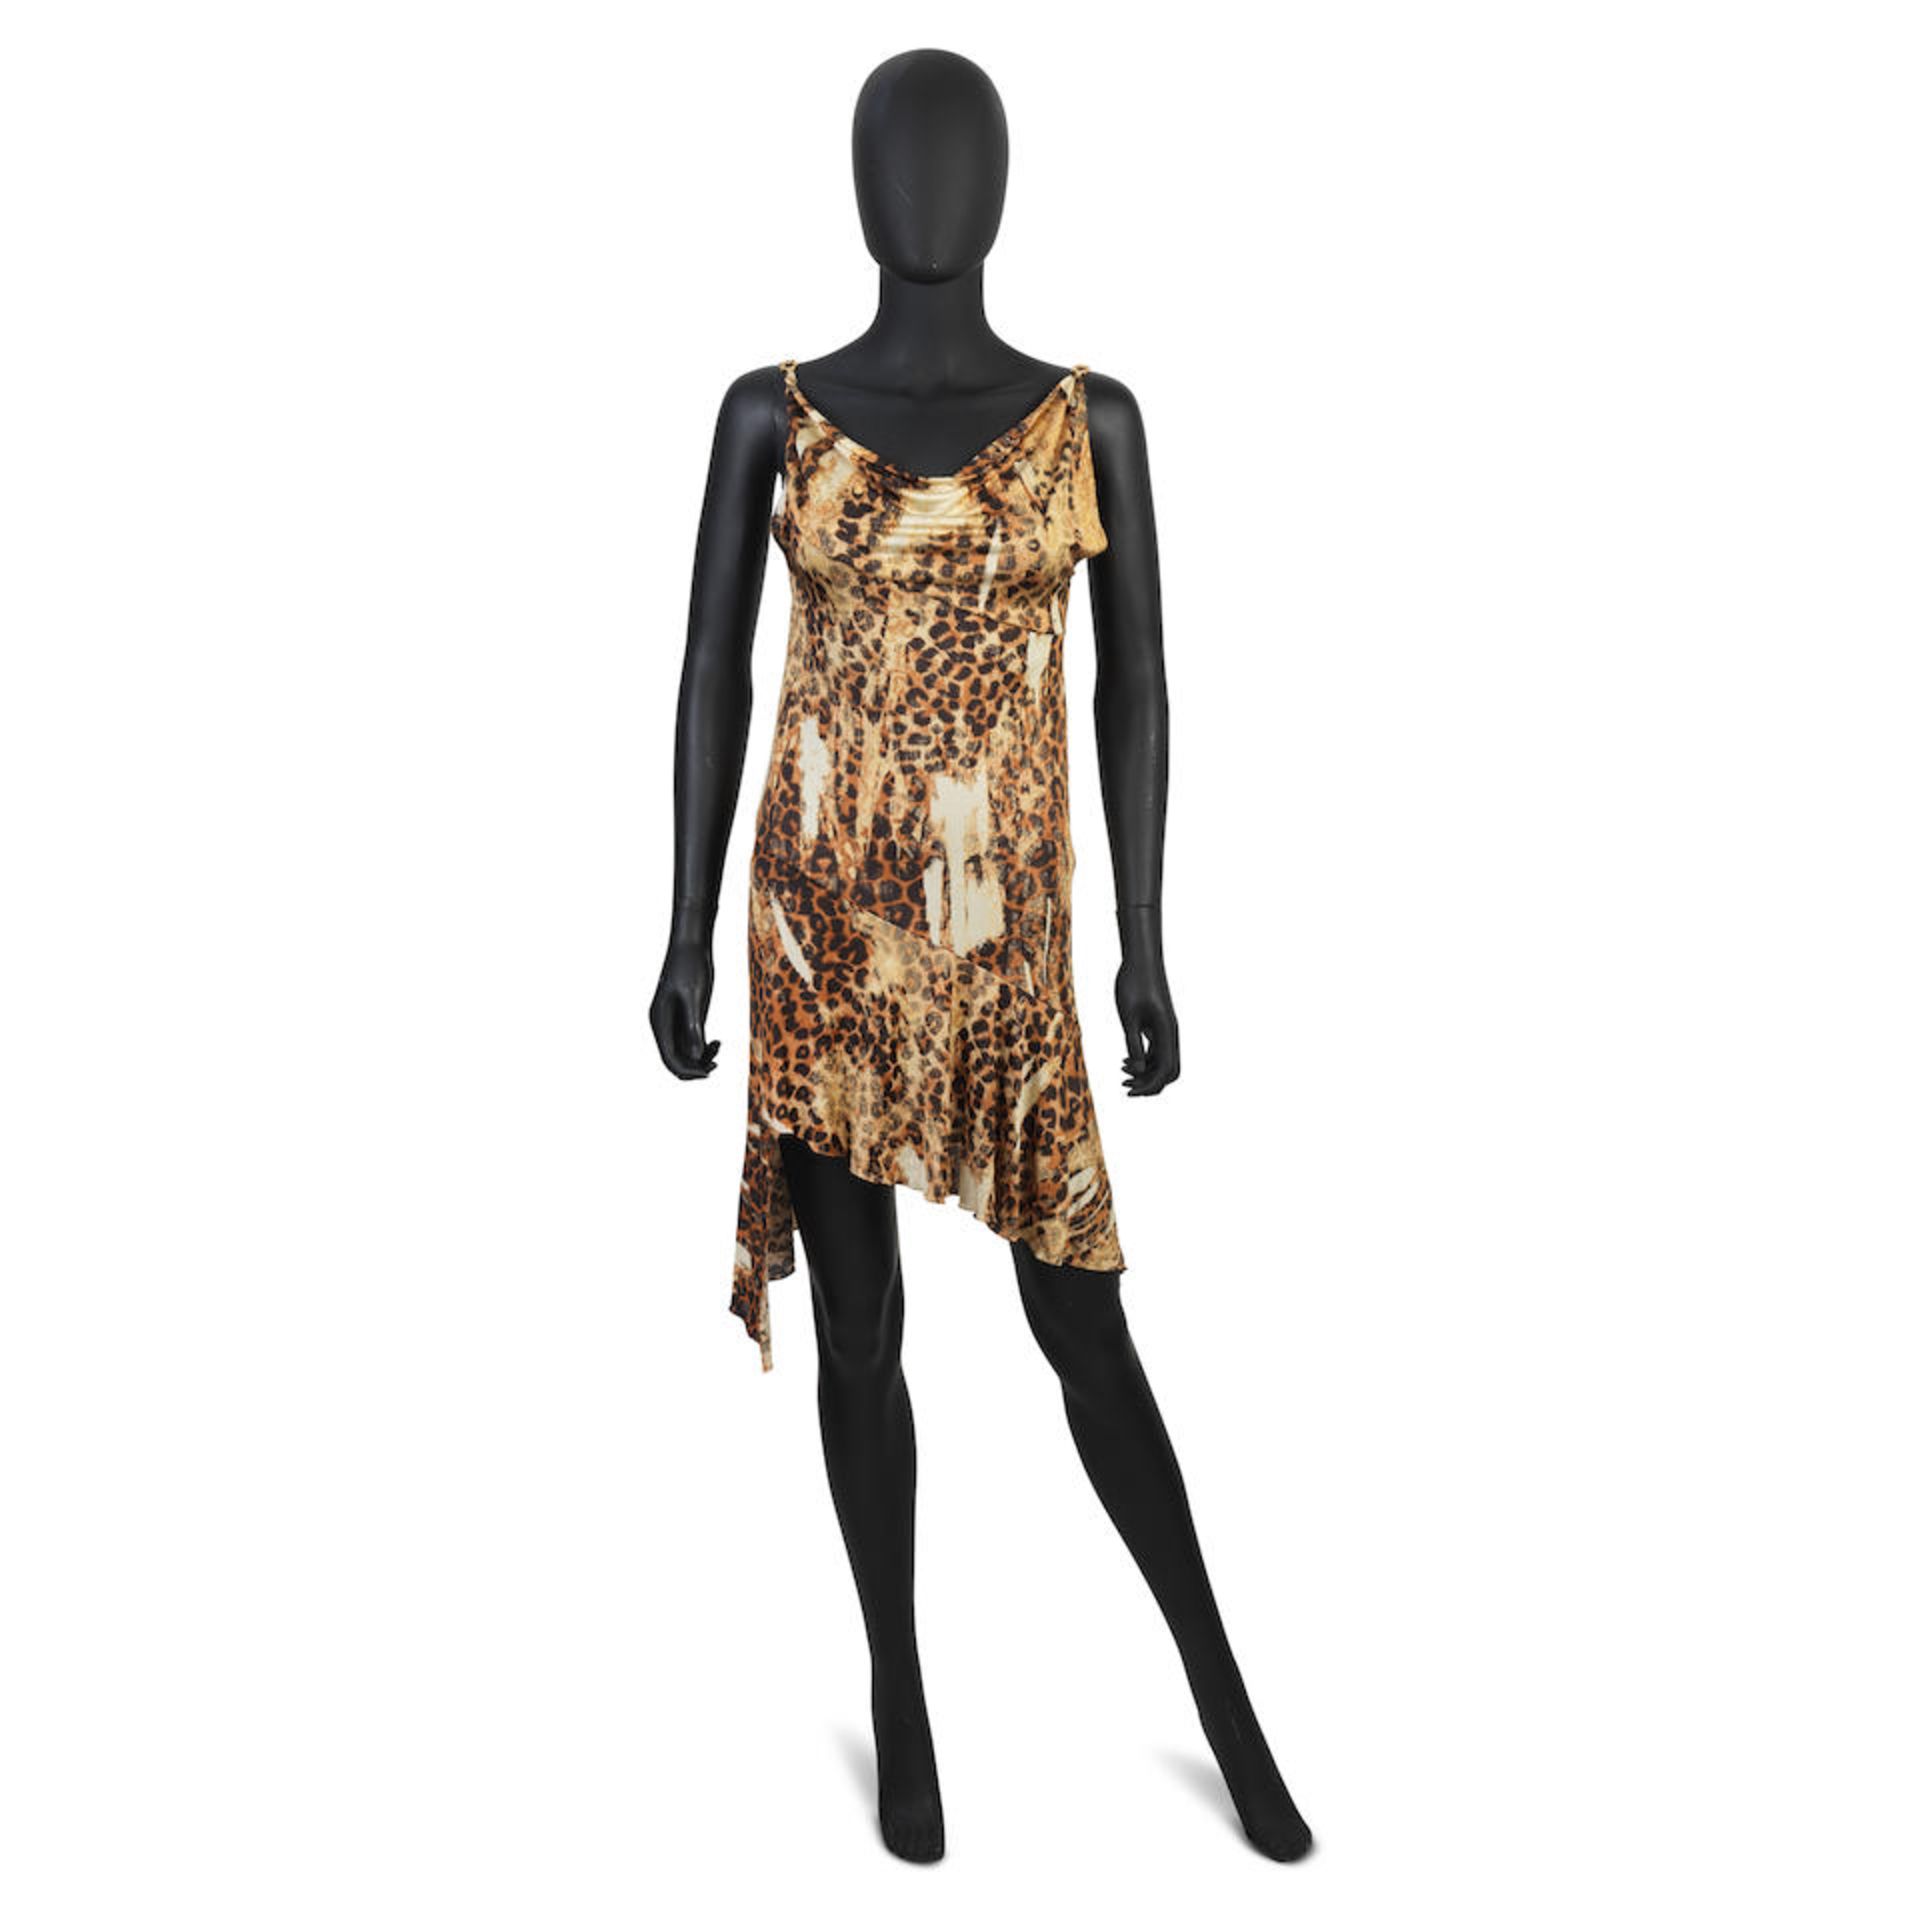 John Galliano for Christian Dior: a Leopard Print Silk Slip Dress Autumn/Winter 2000